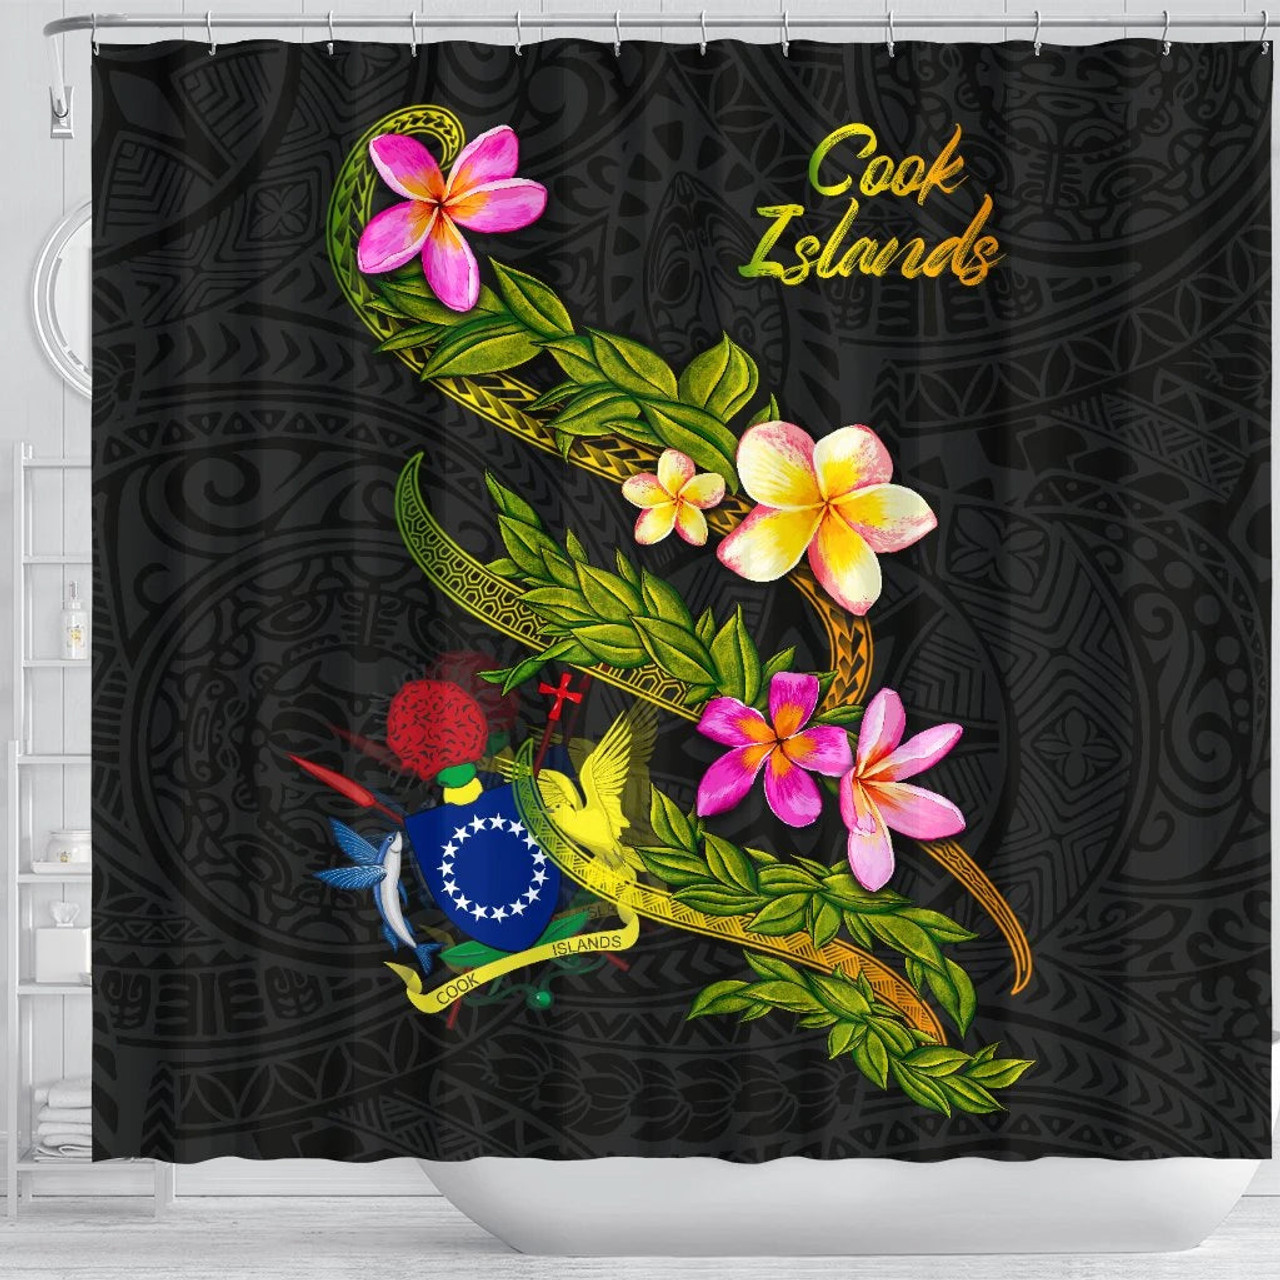 Cook Islands Polynesian Shower Curtain - Plumeria Tribal 3